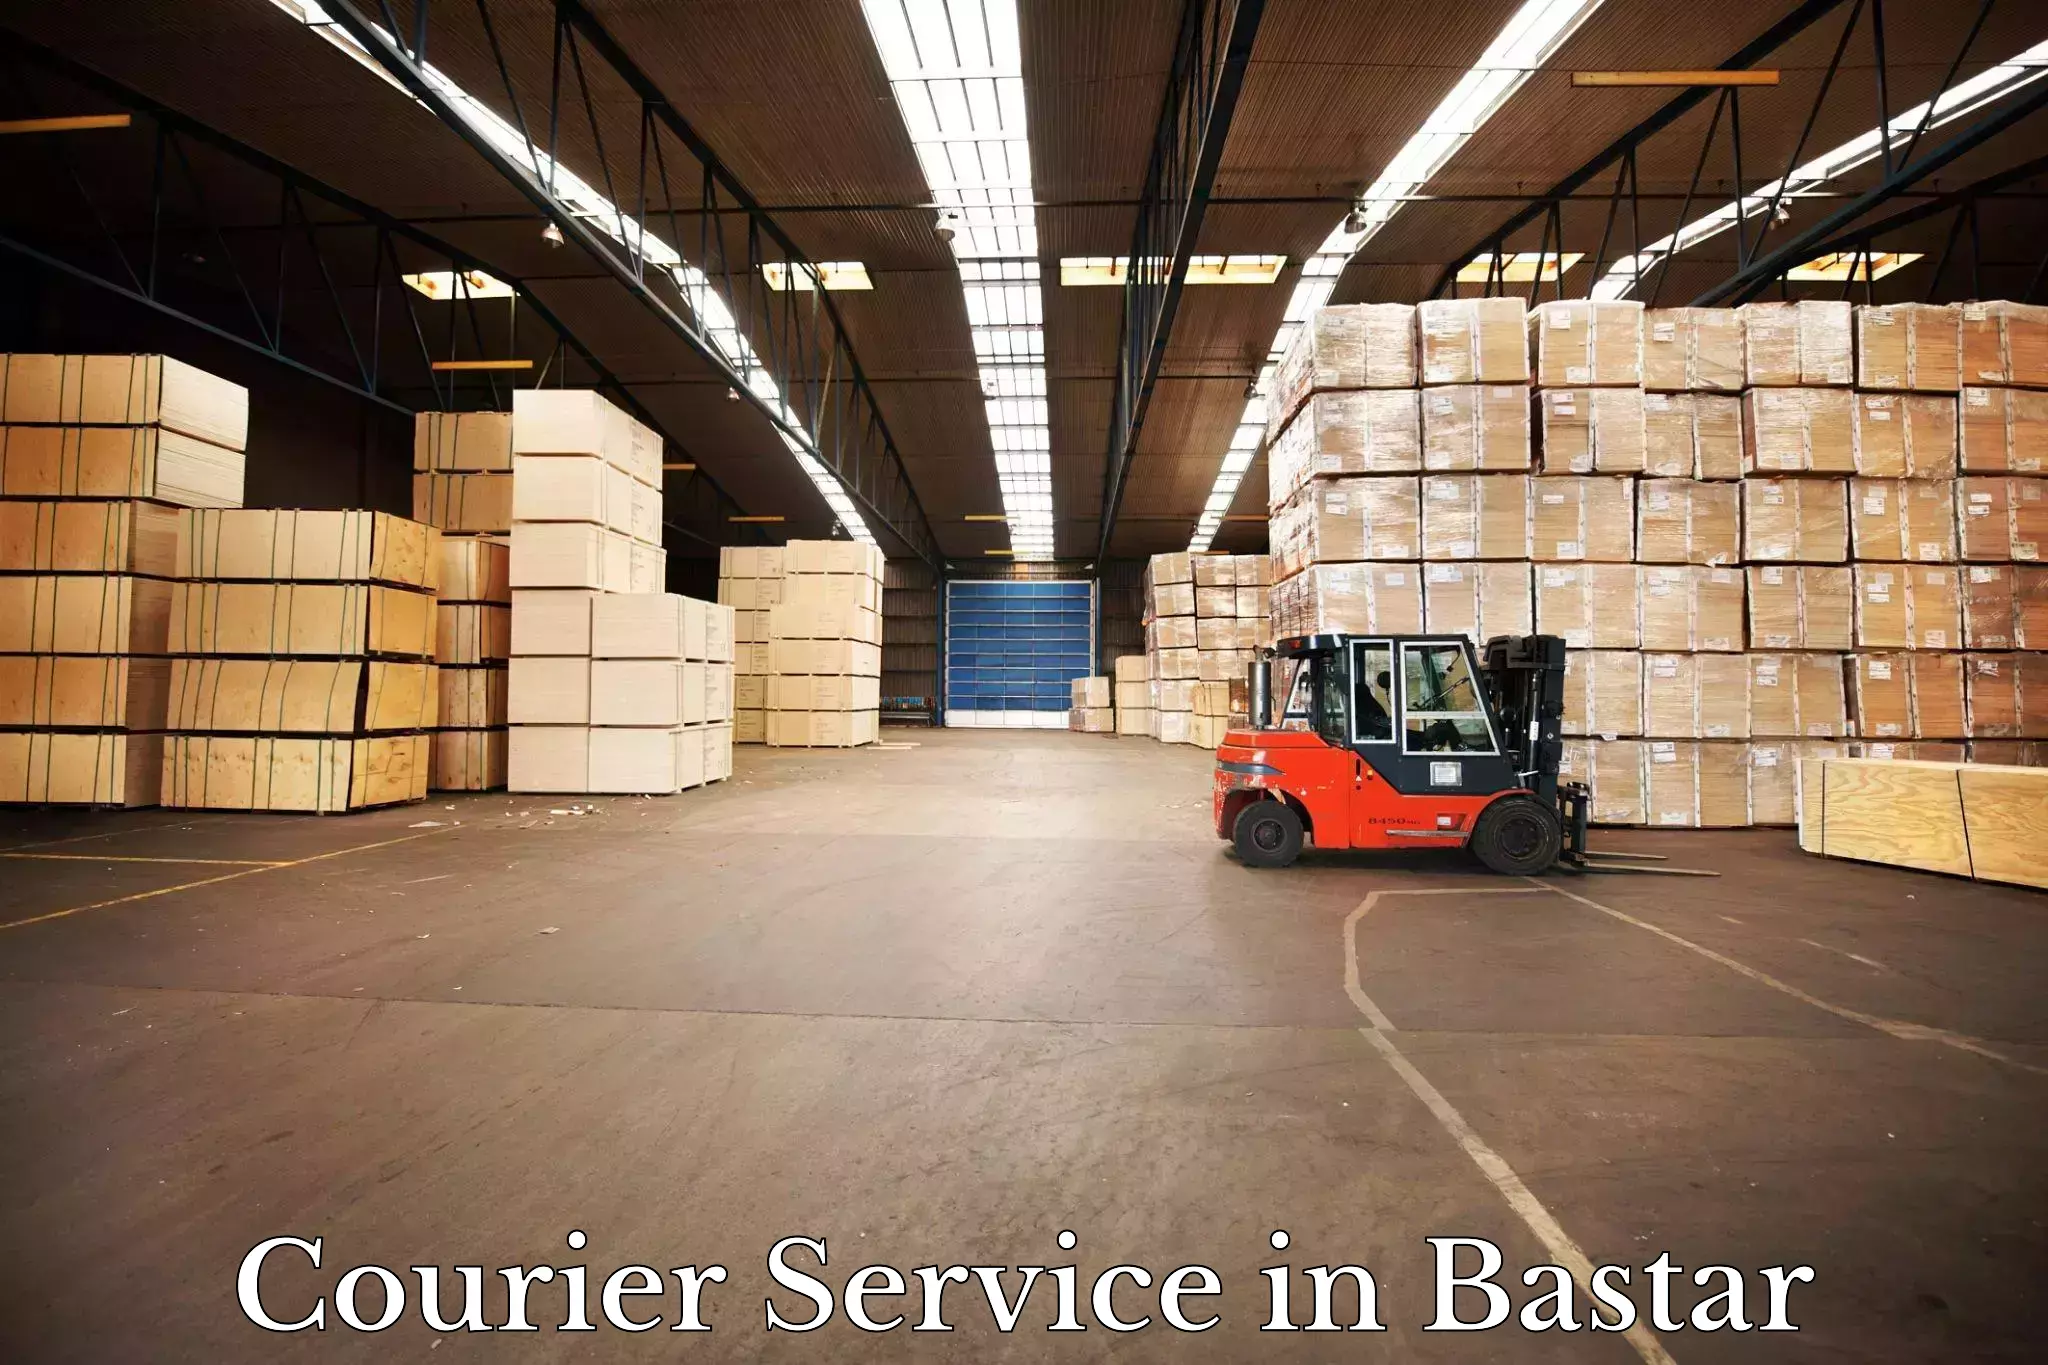 Supply chain efficiency in Bastar